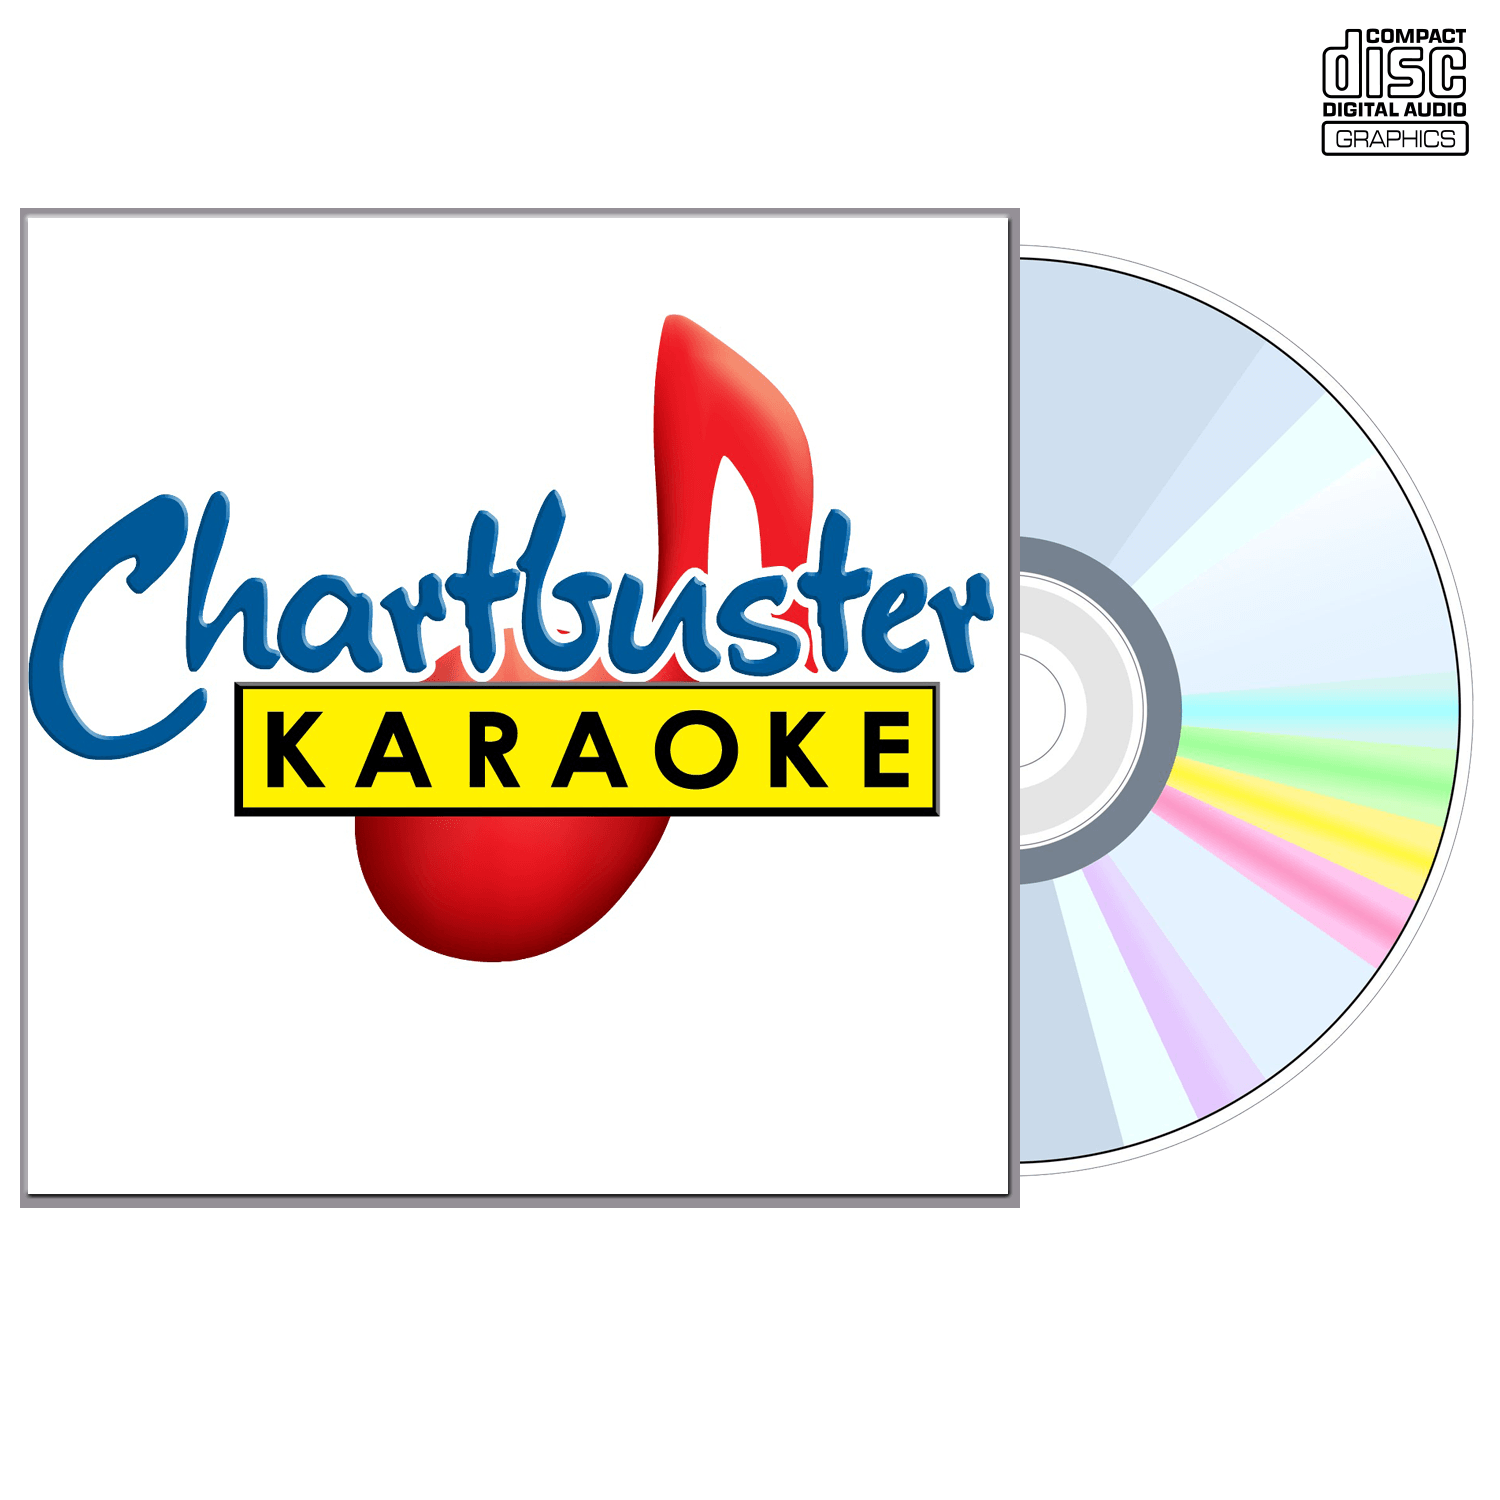 Jimmy Martin - CD+G - Chartbuster Karaoke - Karaoke Home Entertainment